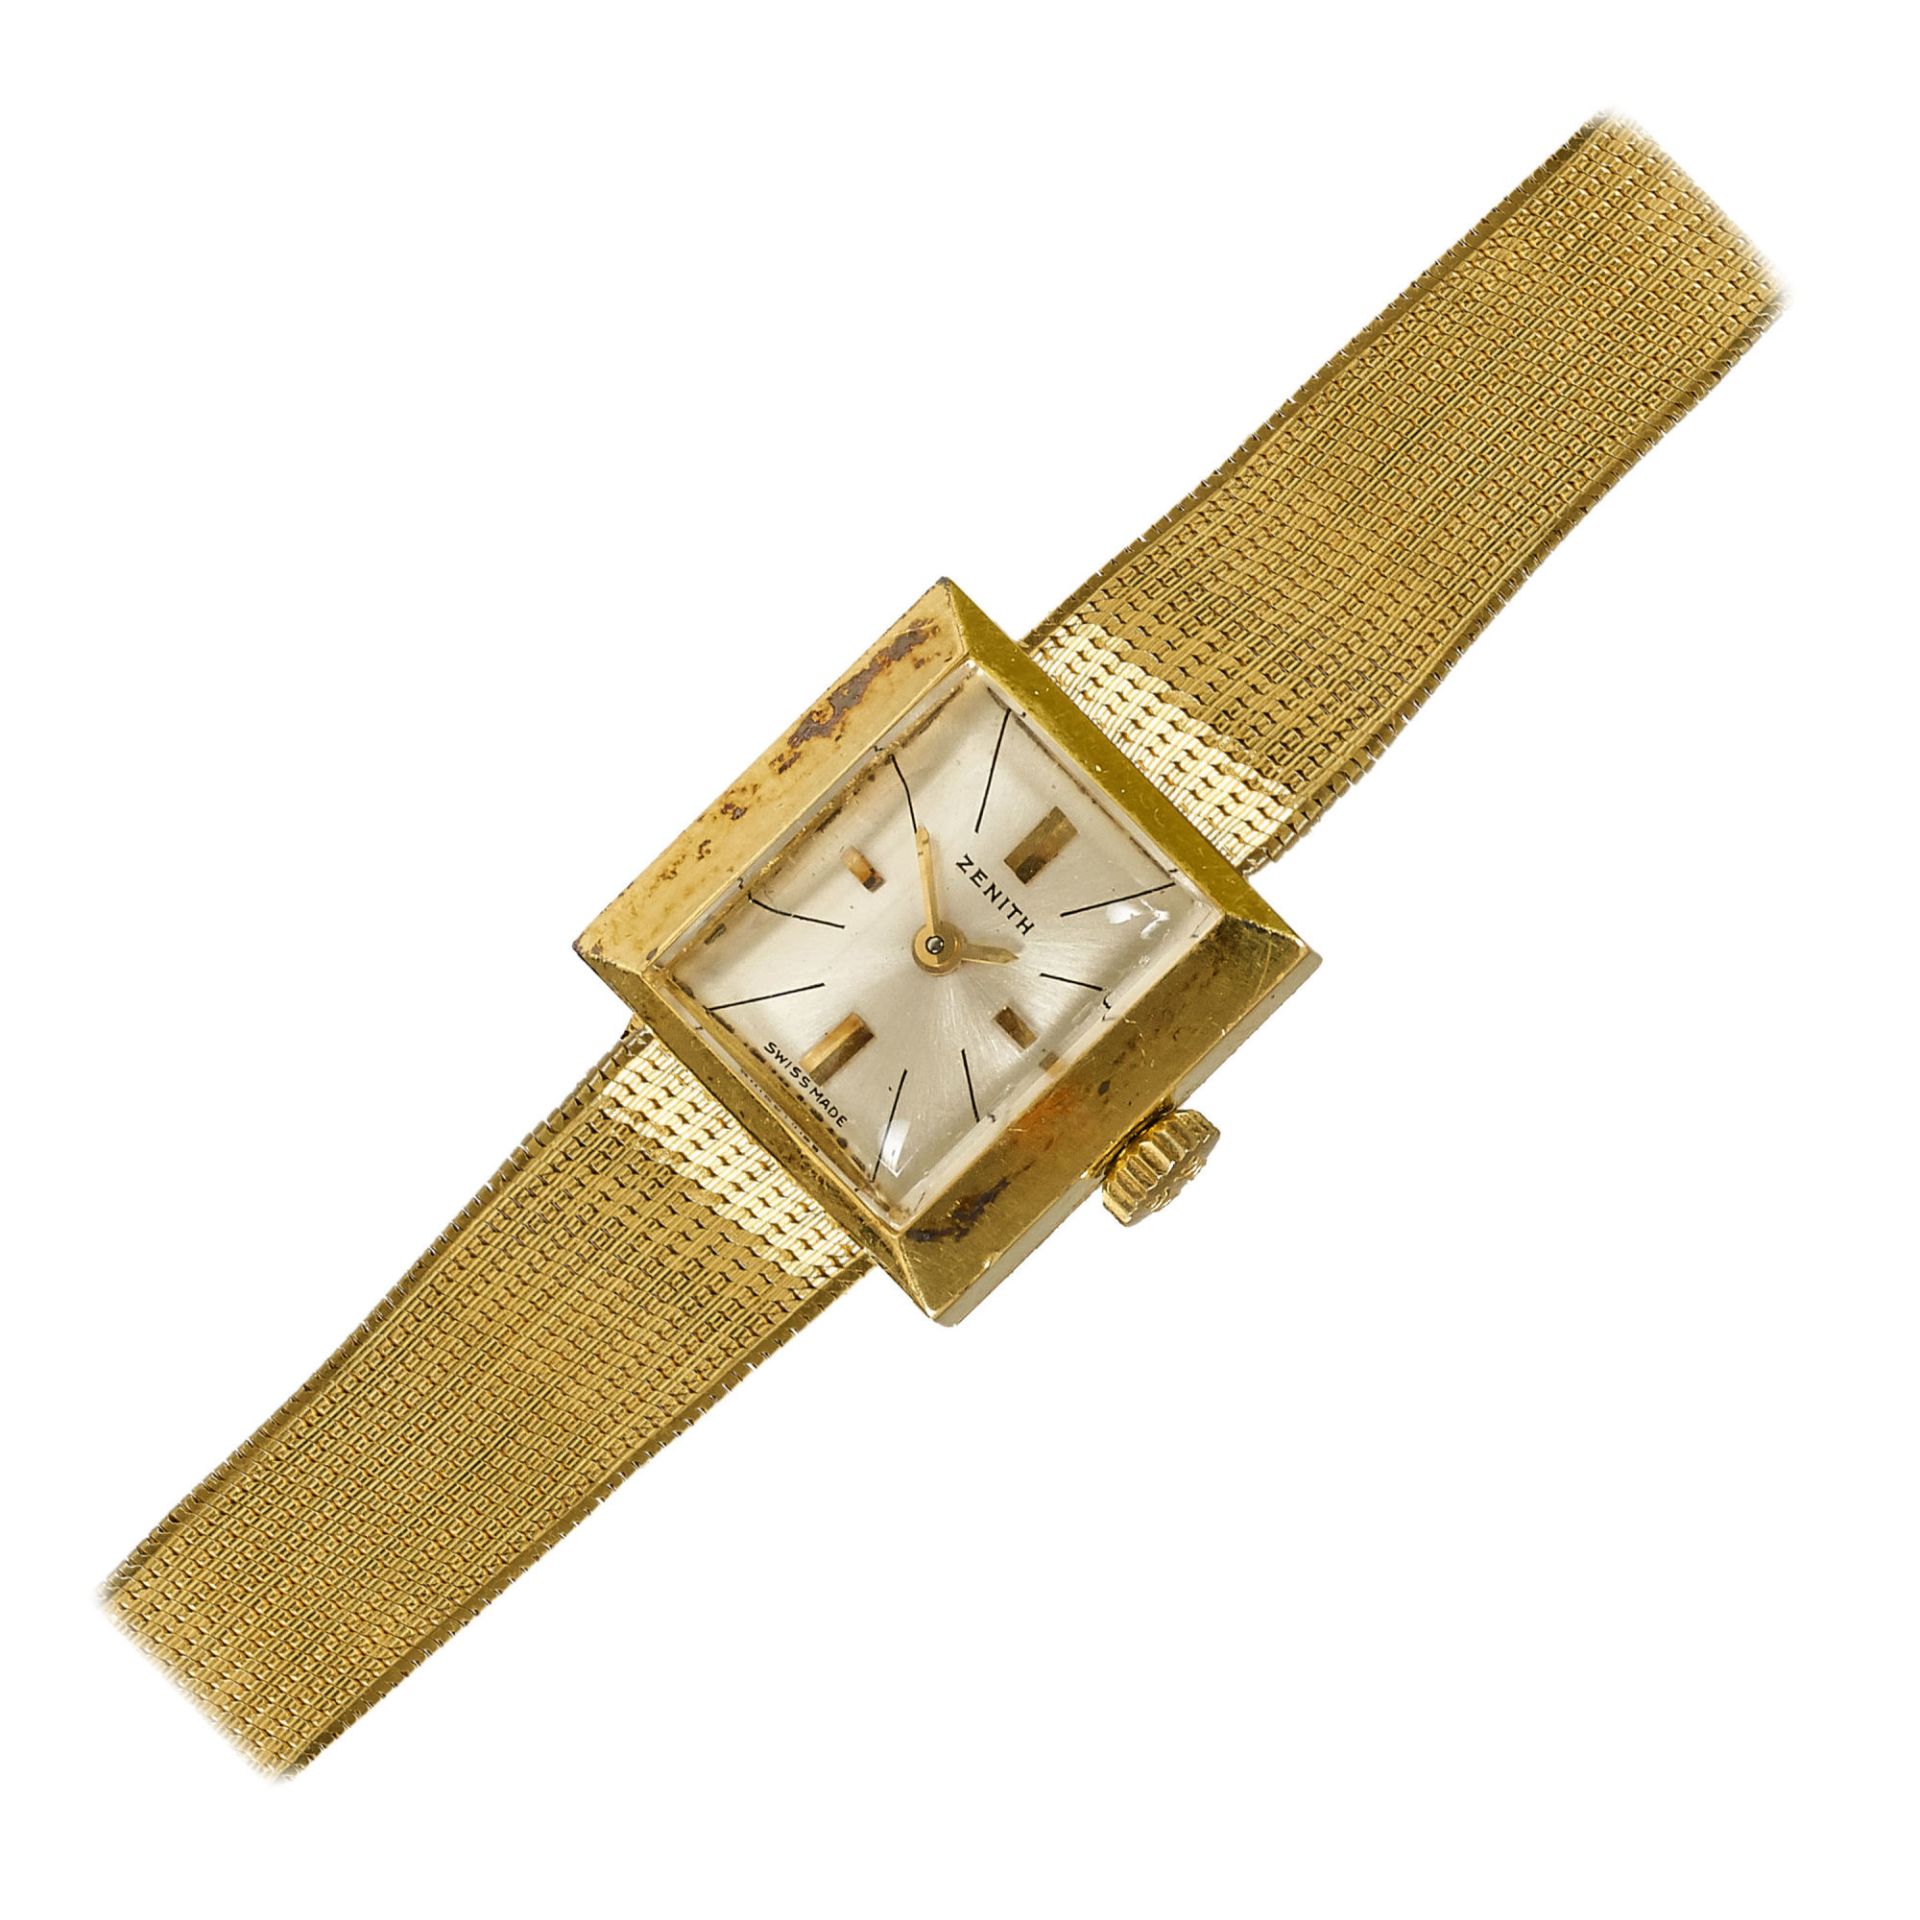 ZENITH: Vintage-Damenarmbanduhr. / Zenith, Vintage-ladies wristwatch.